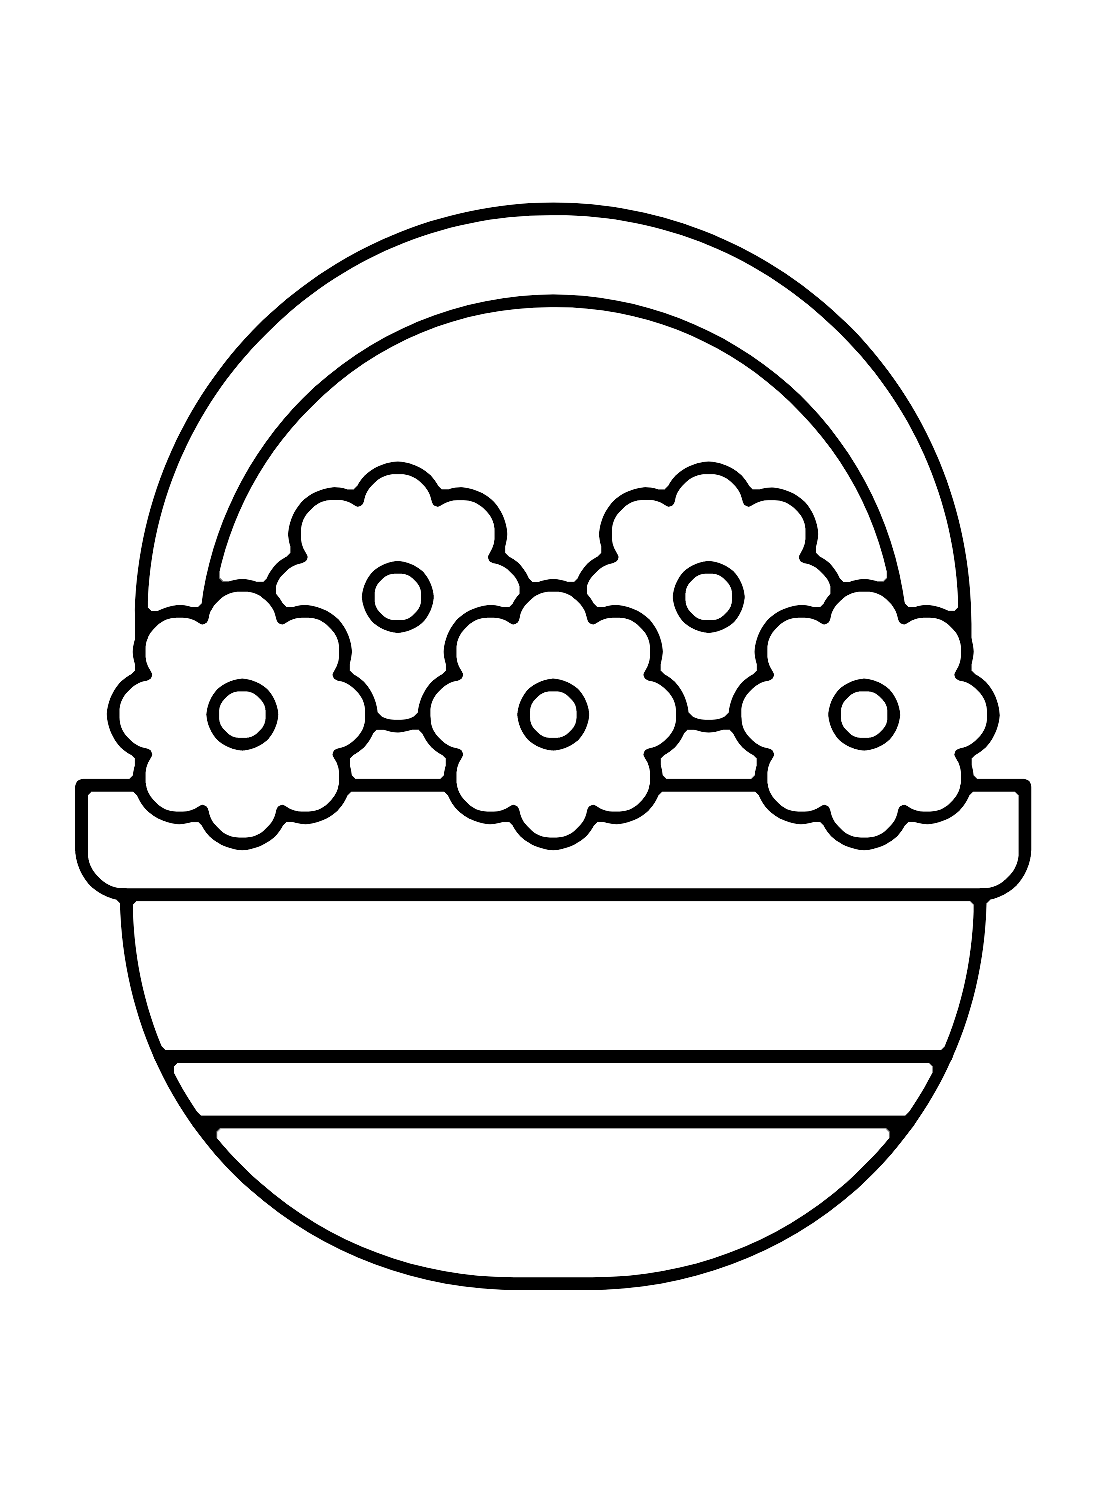 Flower Basket for Preschool Coloring Page